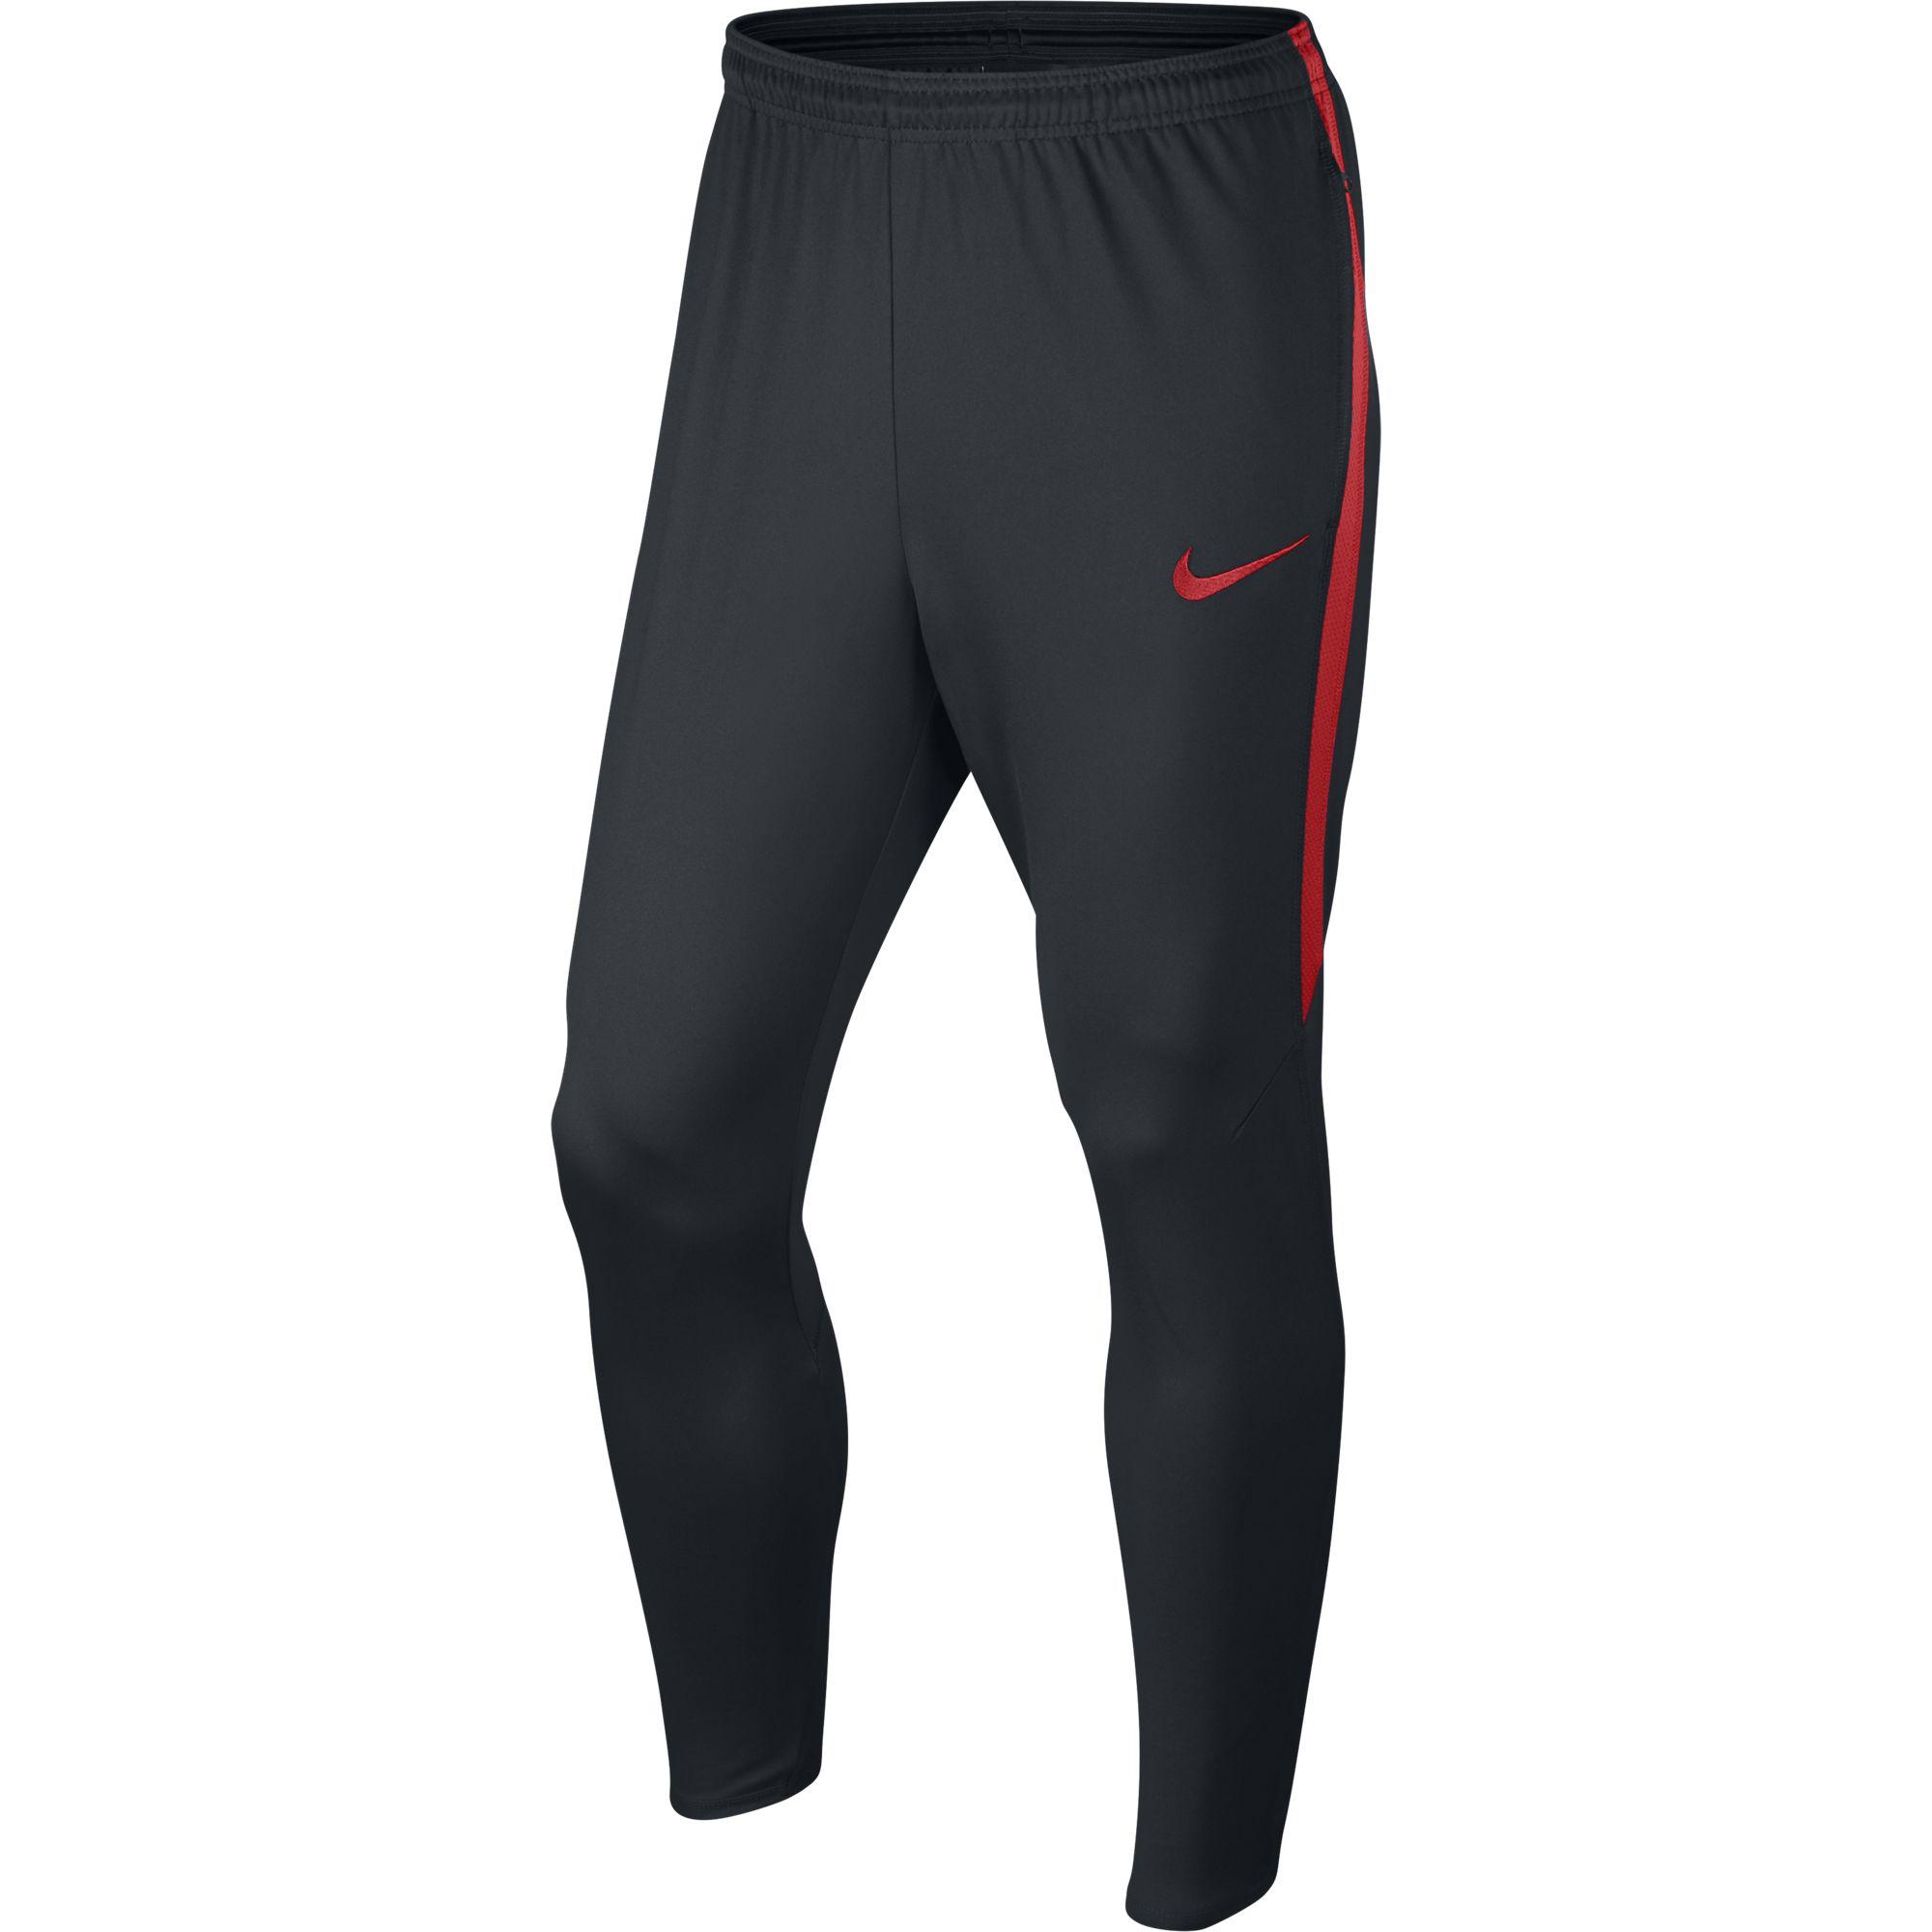 Nike Mens Strike Tech Training Pants - Black/Crimson - Tennisnuts.com